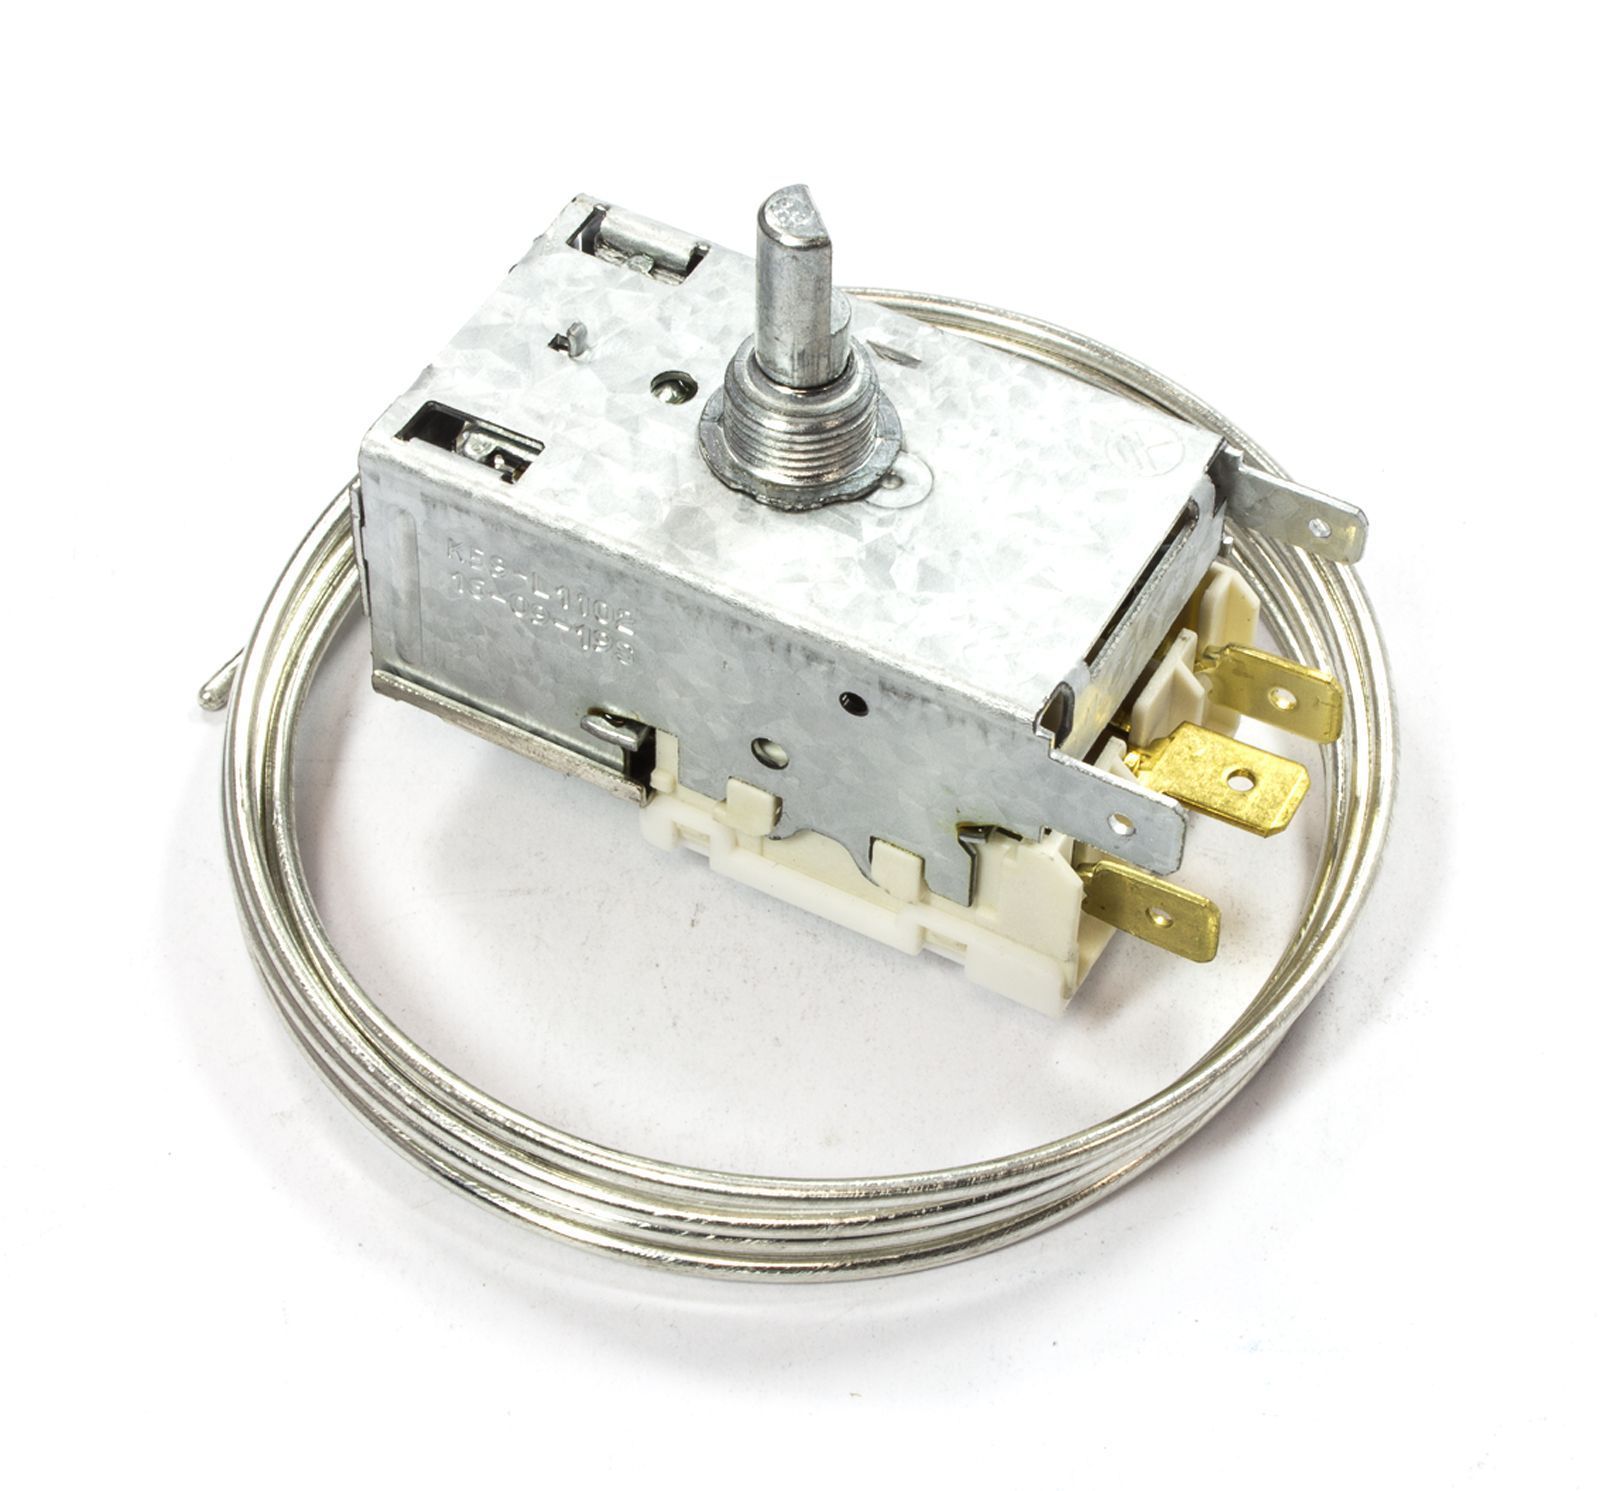 Thermostat K59-L1102 for Fridges Universal BSH - Bosch / Siemens